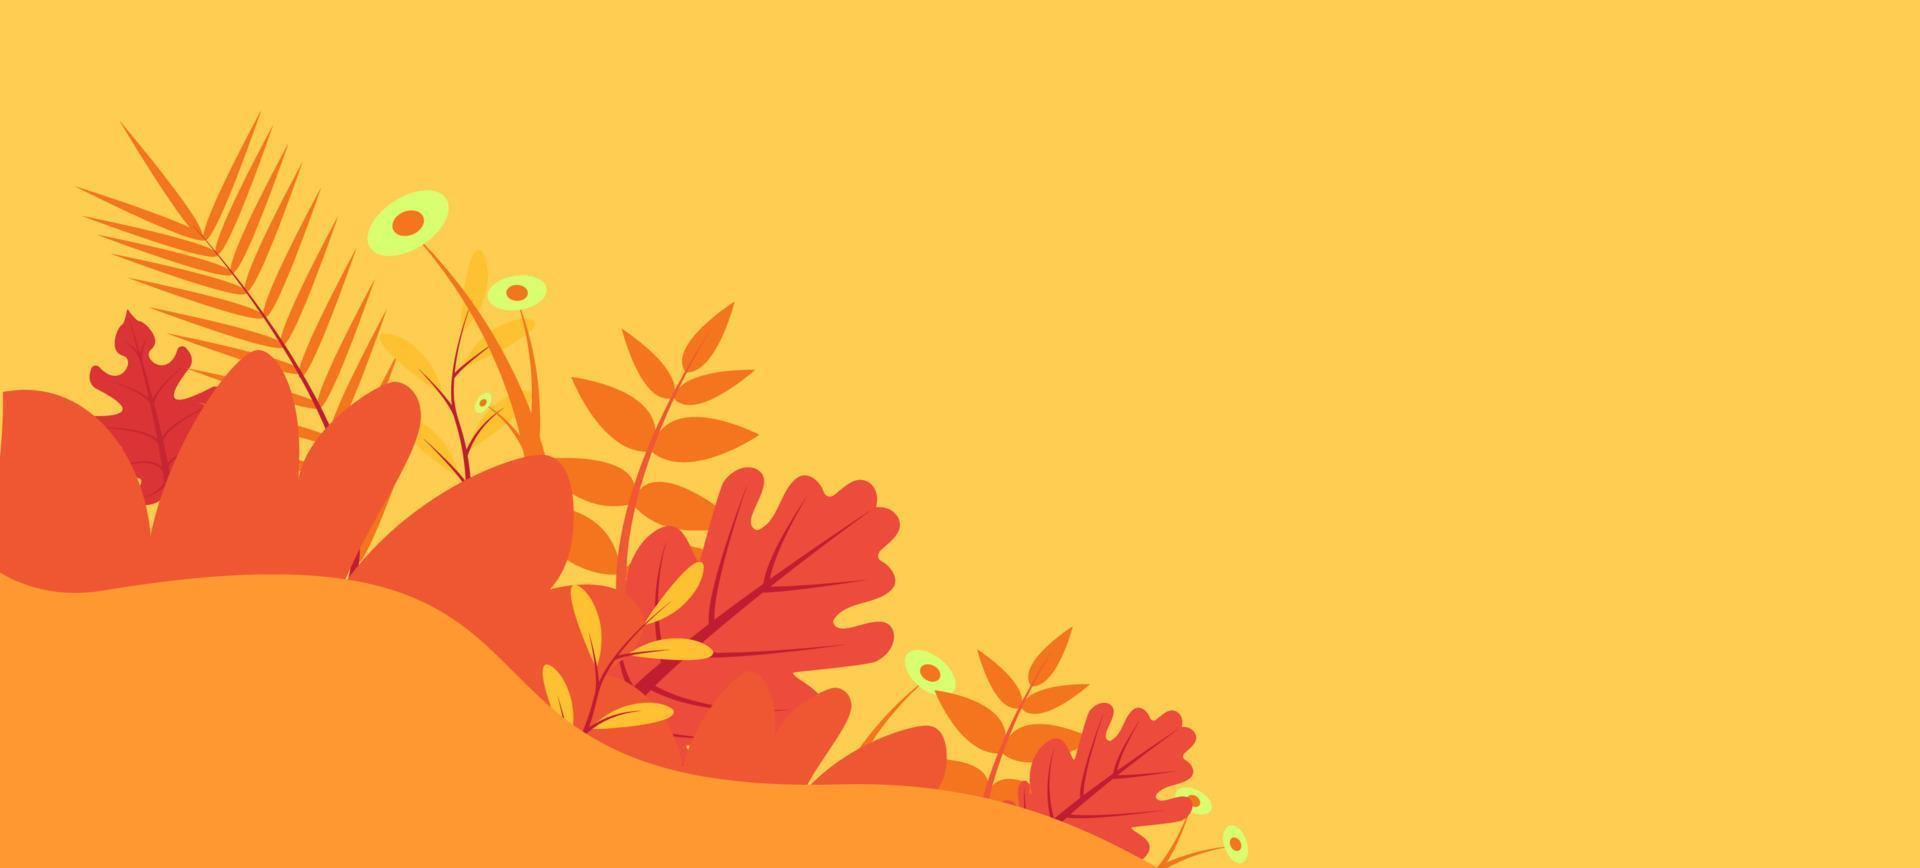 Herbst Hintergrund. Vektor Illustration eps 10